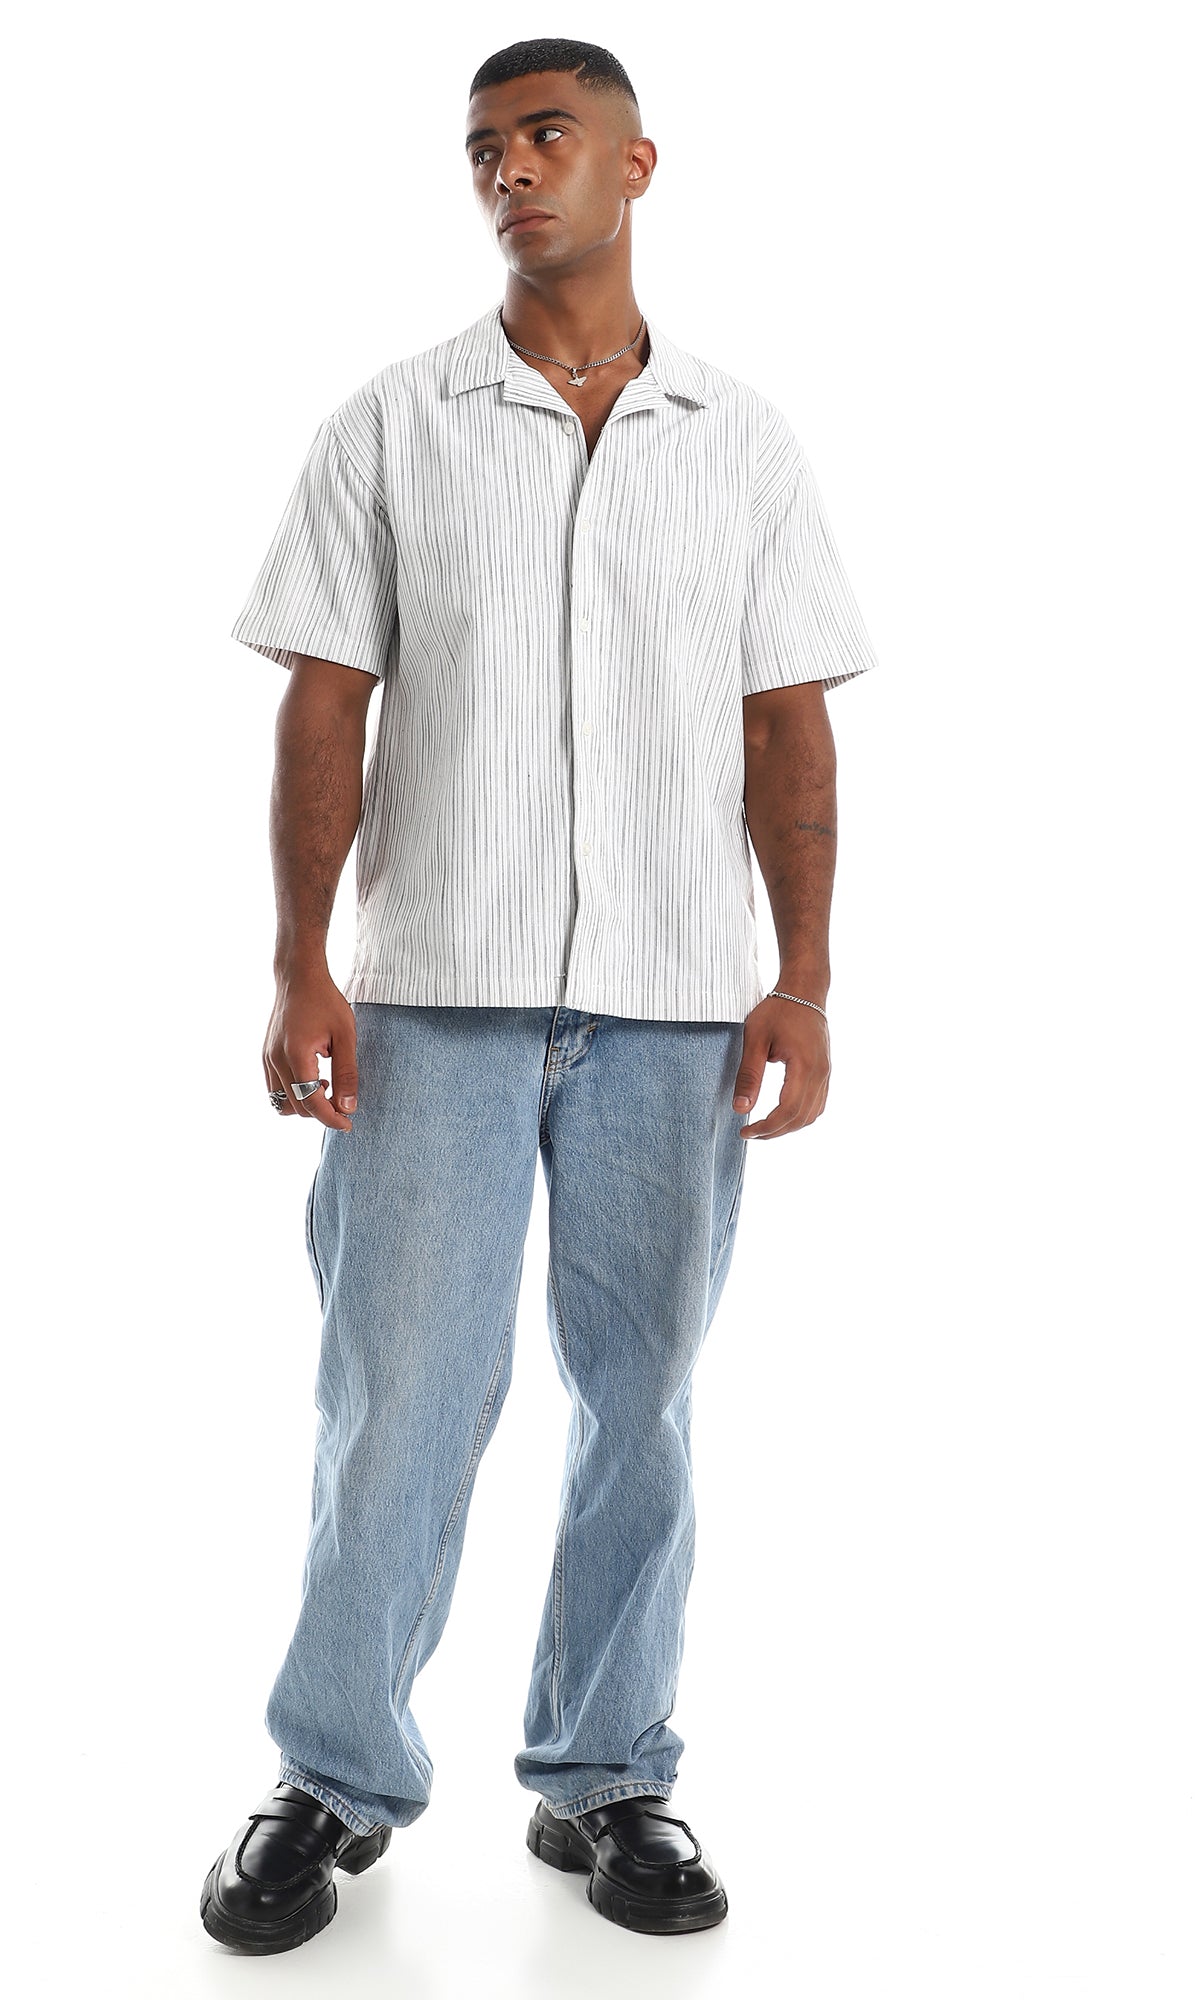 97876 Stripe Patterned Short Sleeves White & Black Button Down Shirt